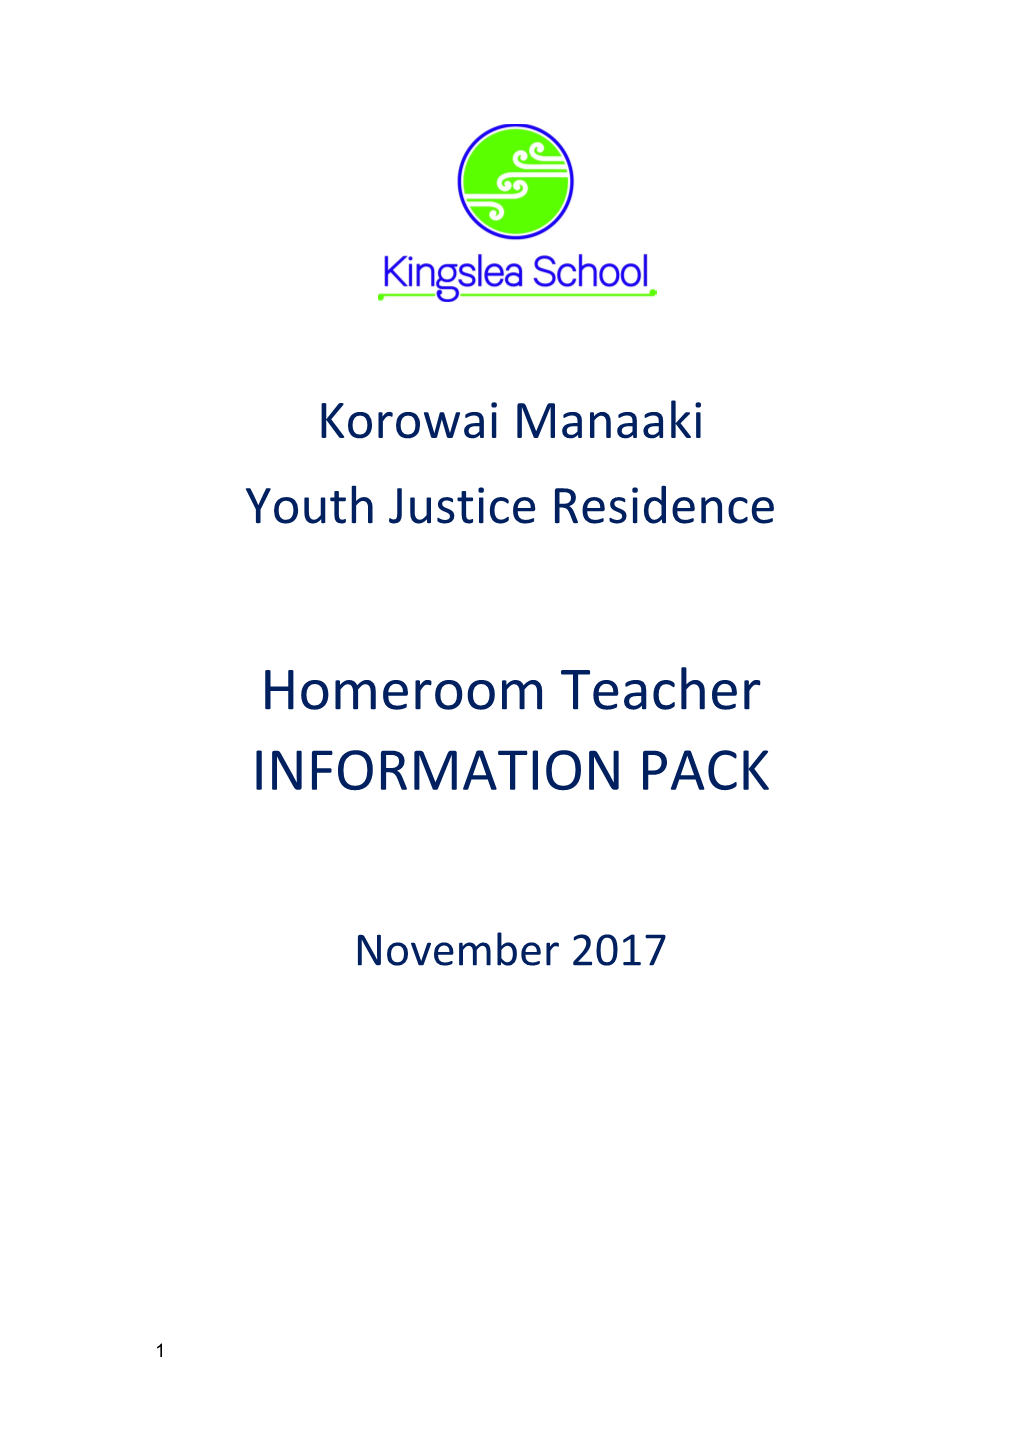 Homeroom Teacher INFORMATION PACK